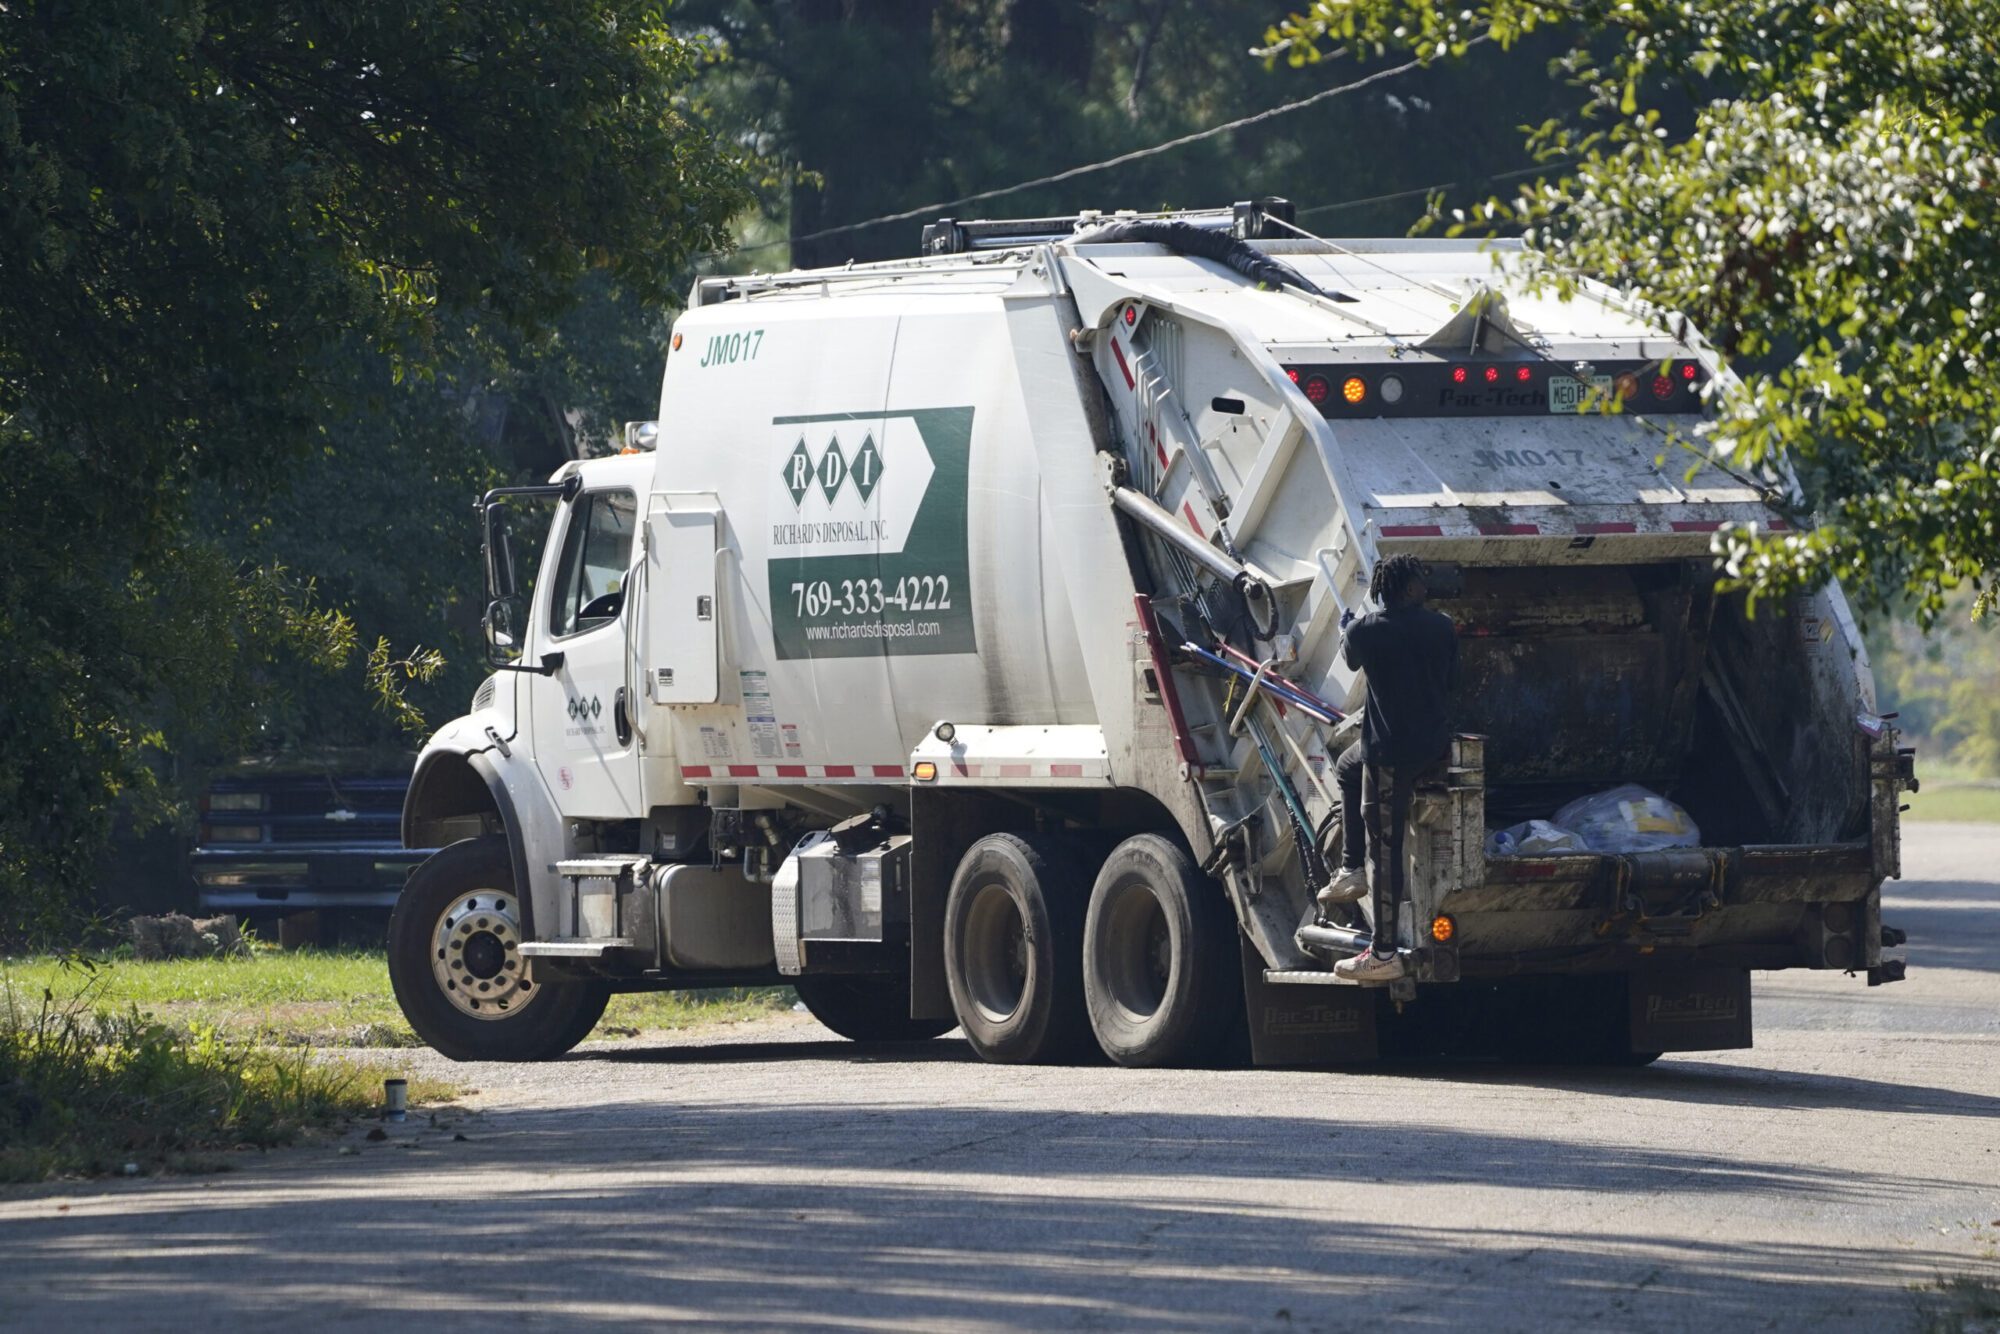 Richard's Disposal trash truck in City of Jackson